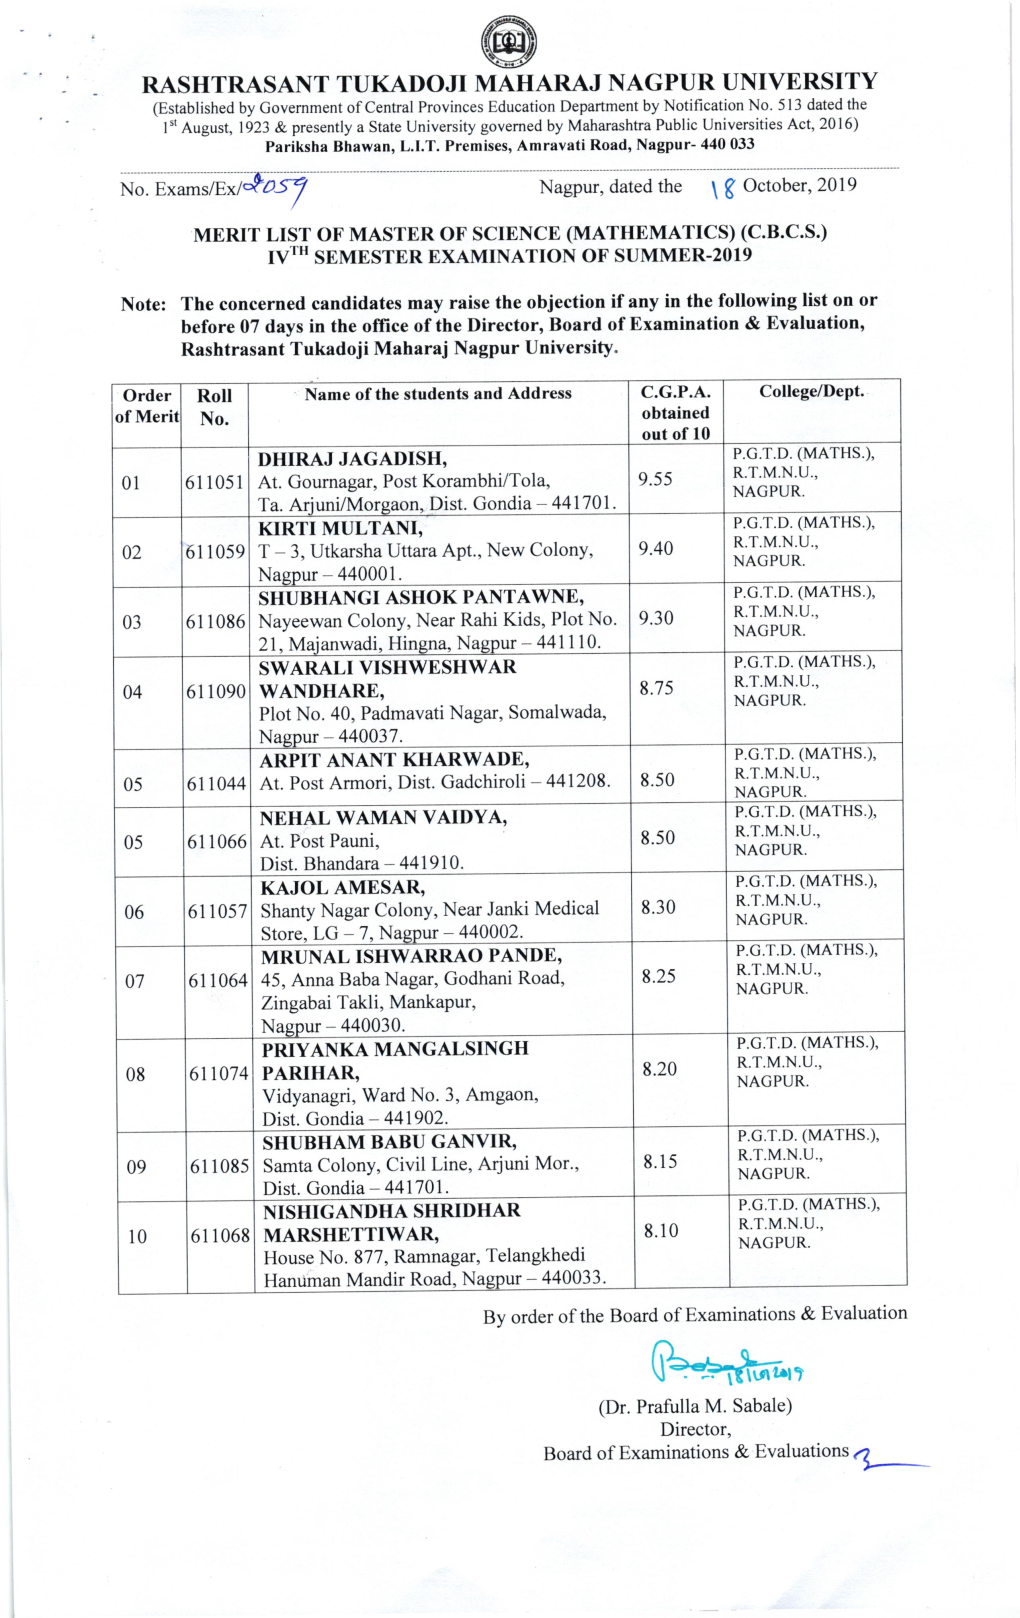 Merit List of M.Sc. (Mathematics)